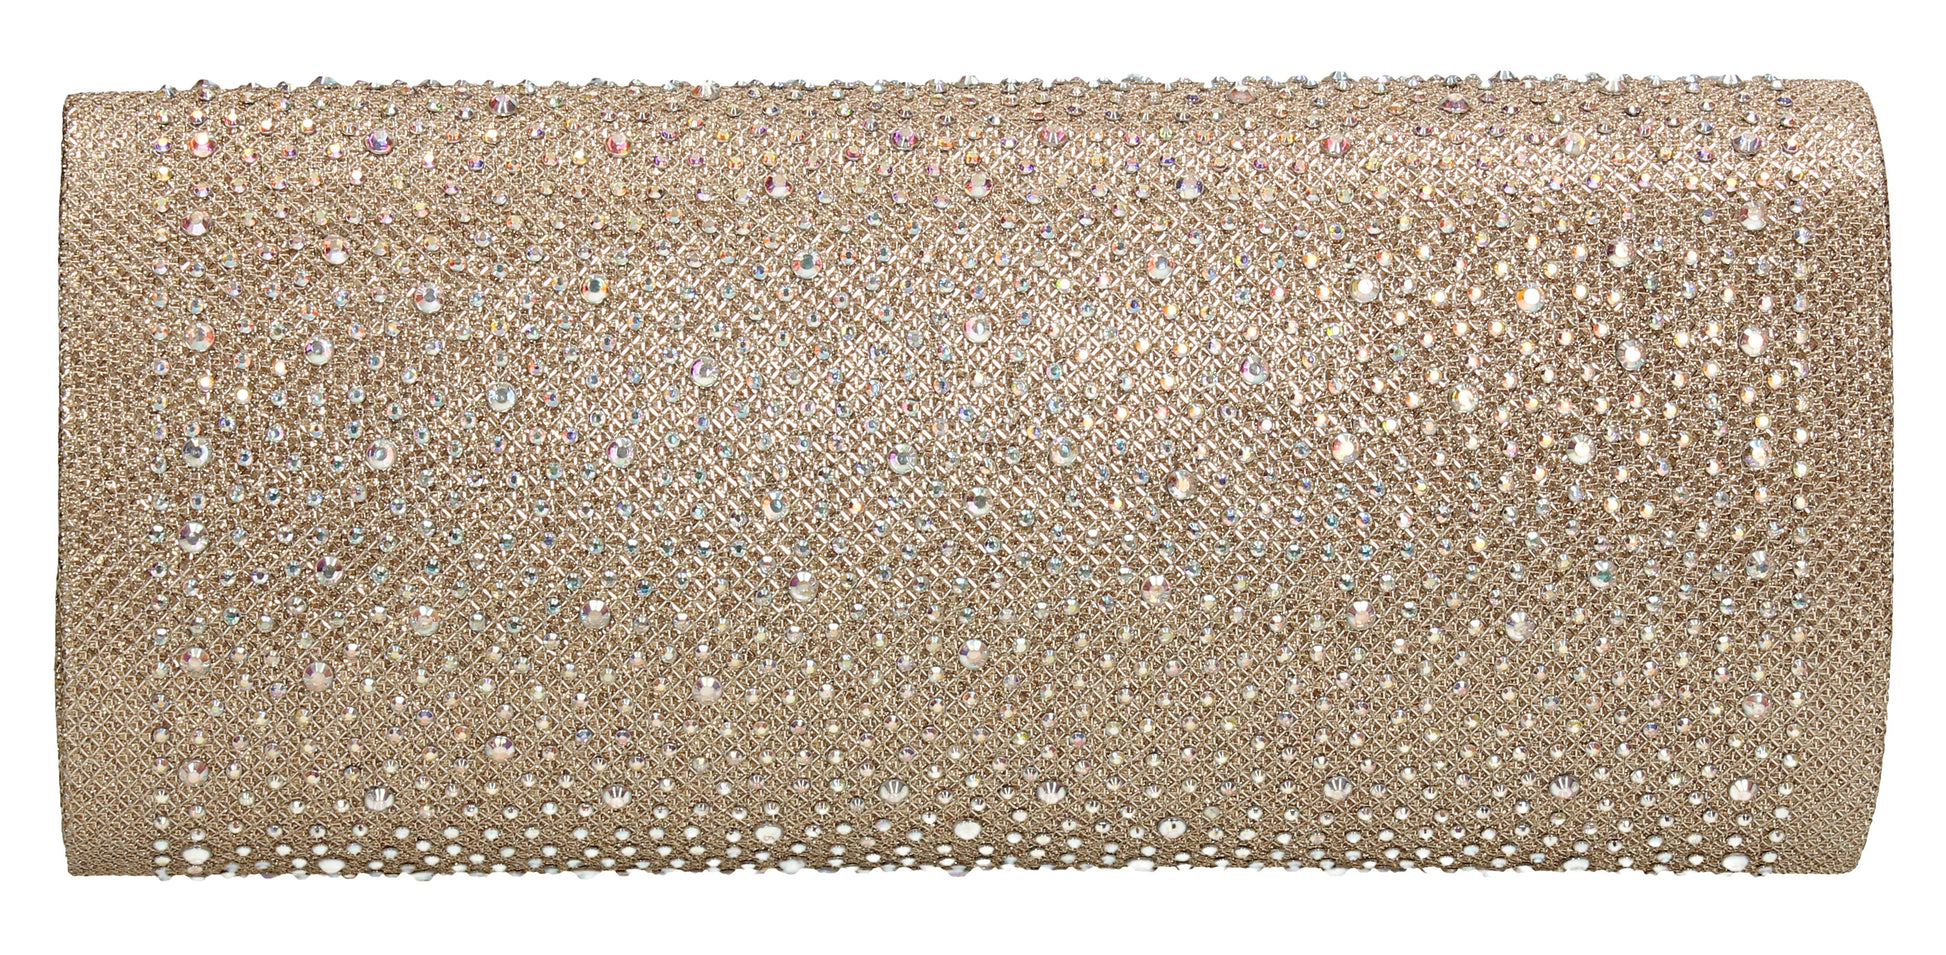 SWANKYSWANS Esther Glitter Diamante Clutch Bag Champagne Cute Cheap Clutch Bag For Weddings School and Work